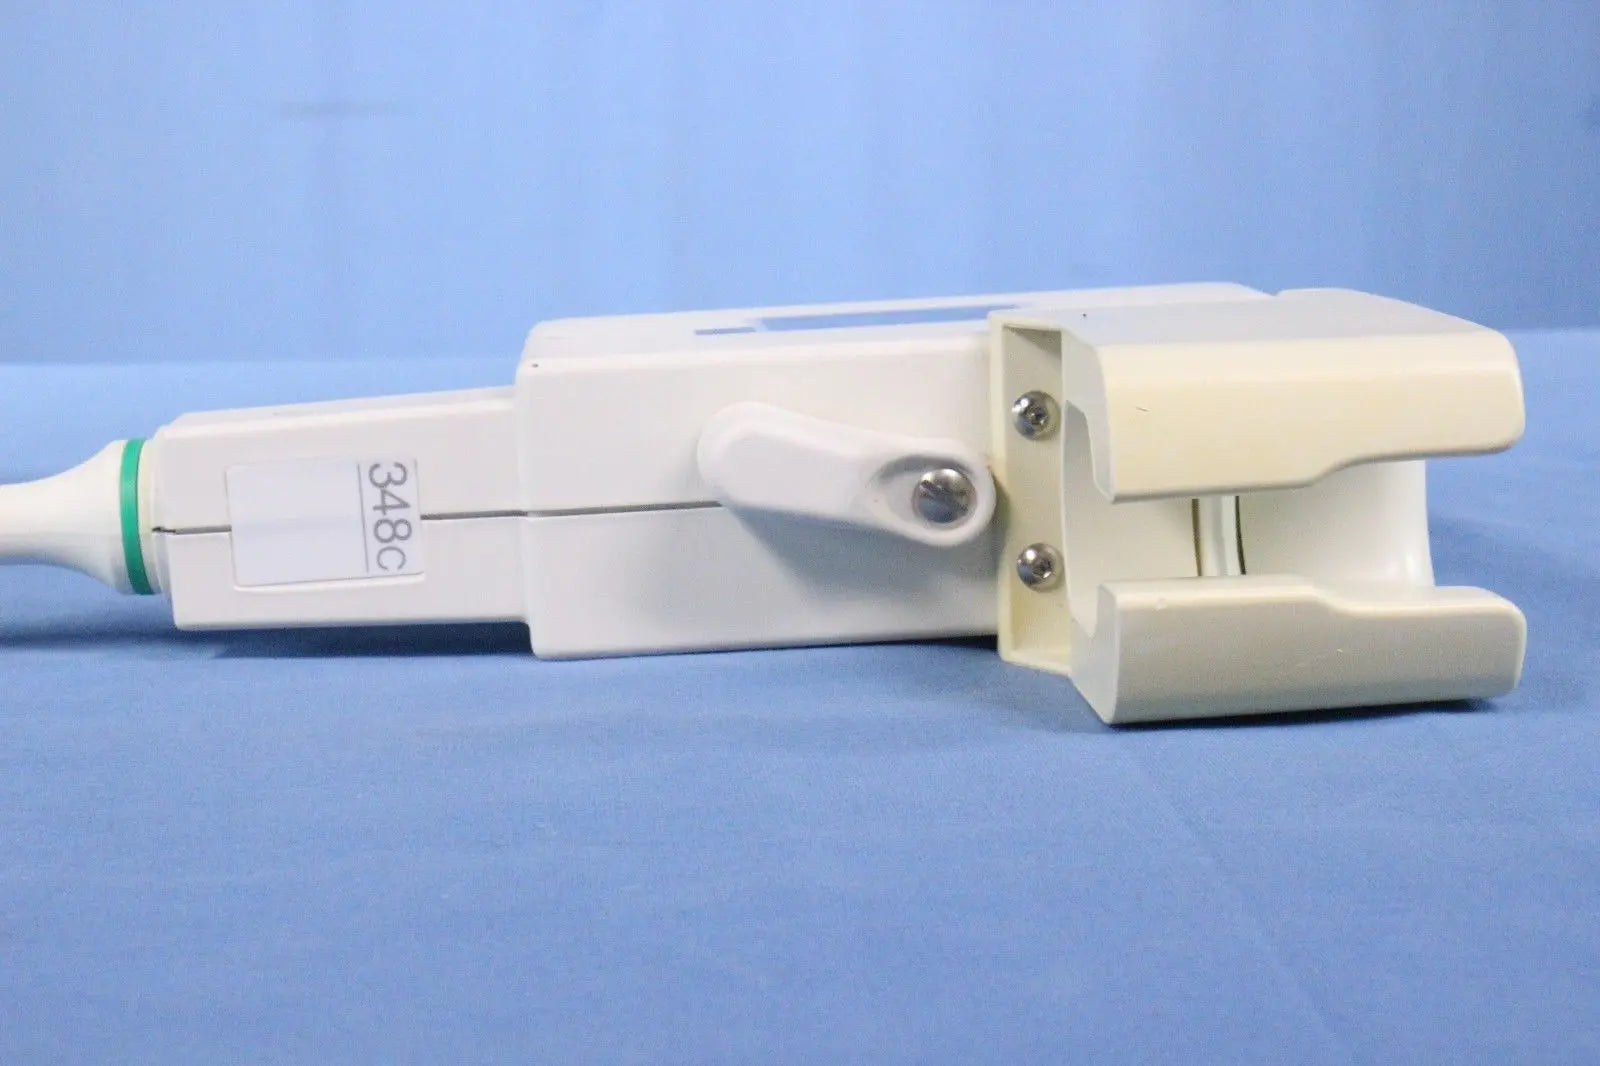 GE 348C Ultrasound Transducer Ultrasound Probe with Warranty DIAGNOSTIC ULTRASOUND MACHINES FOR SALE